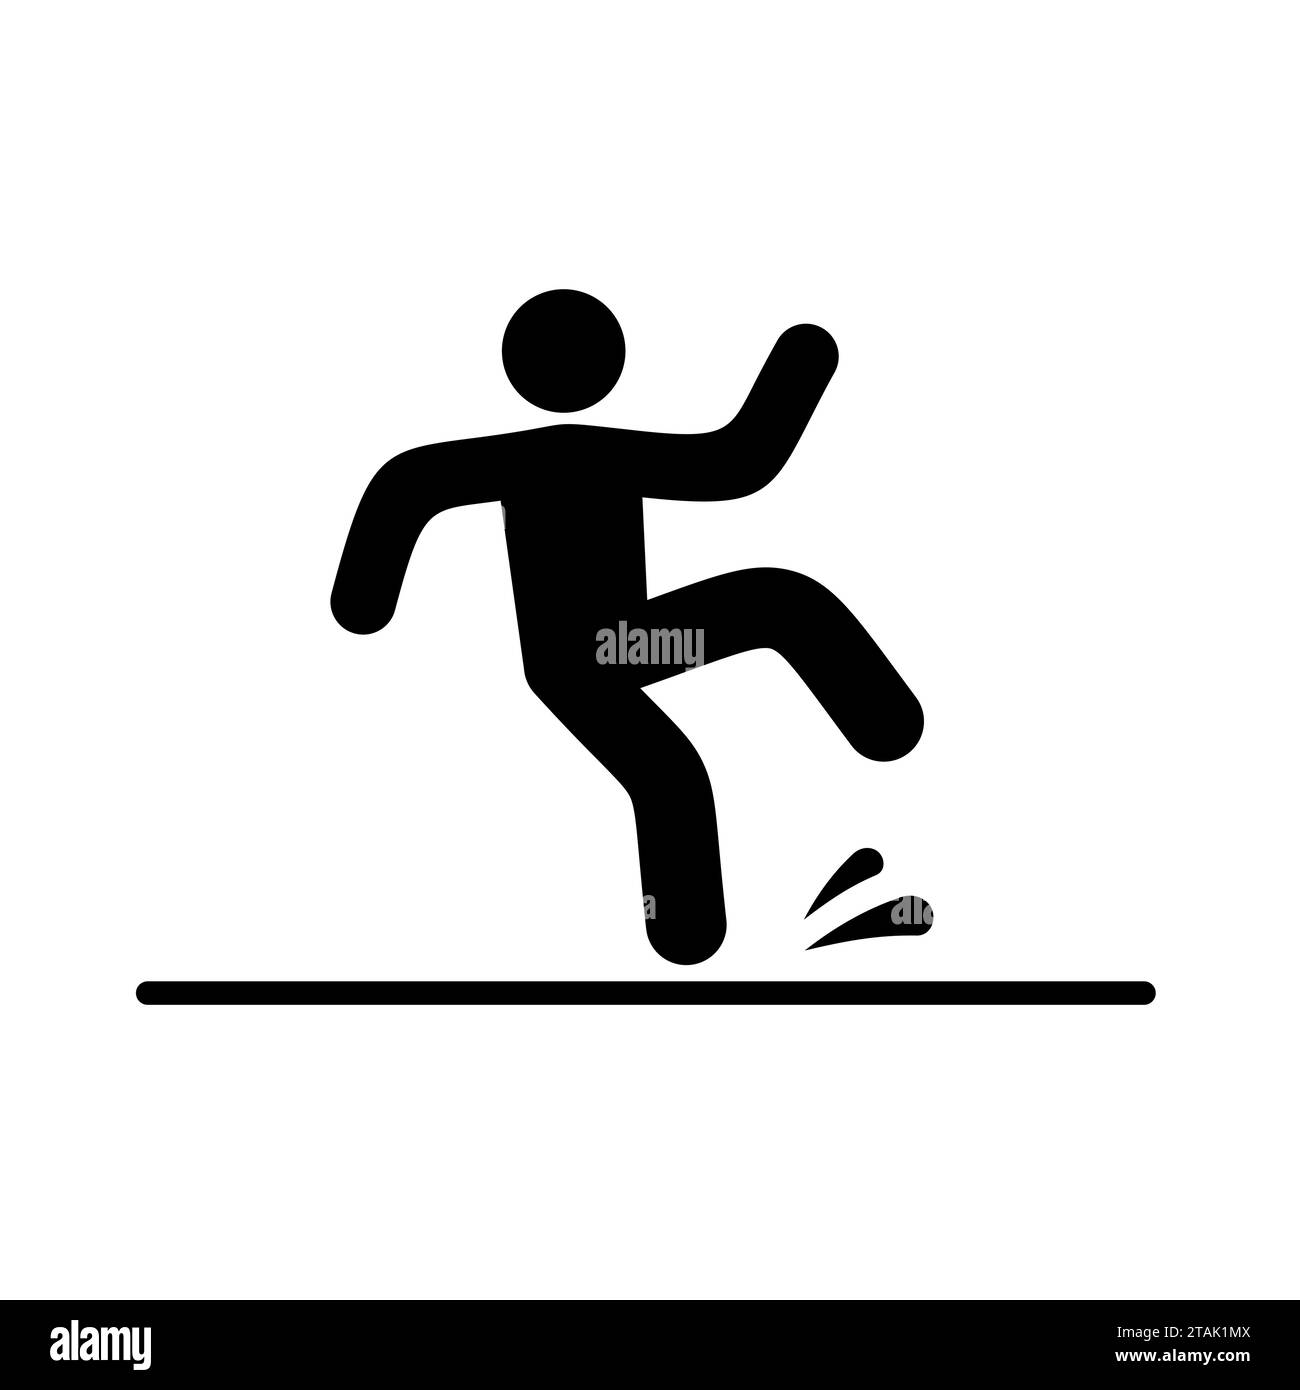 Slippery surface beware icon, Wet floor caution sign isolated on white background, Public warning symbol. Falling human pictogram. Vector illustartion Stock Vector